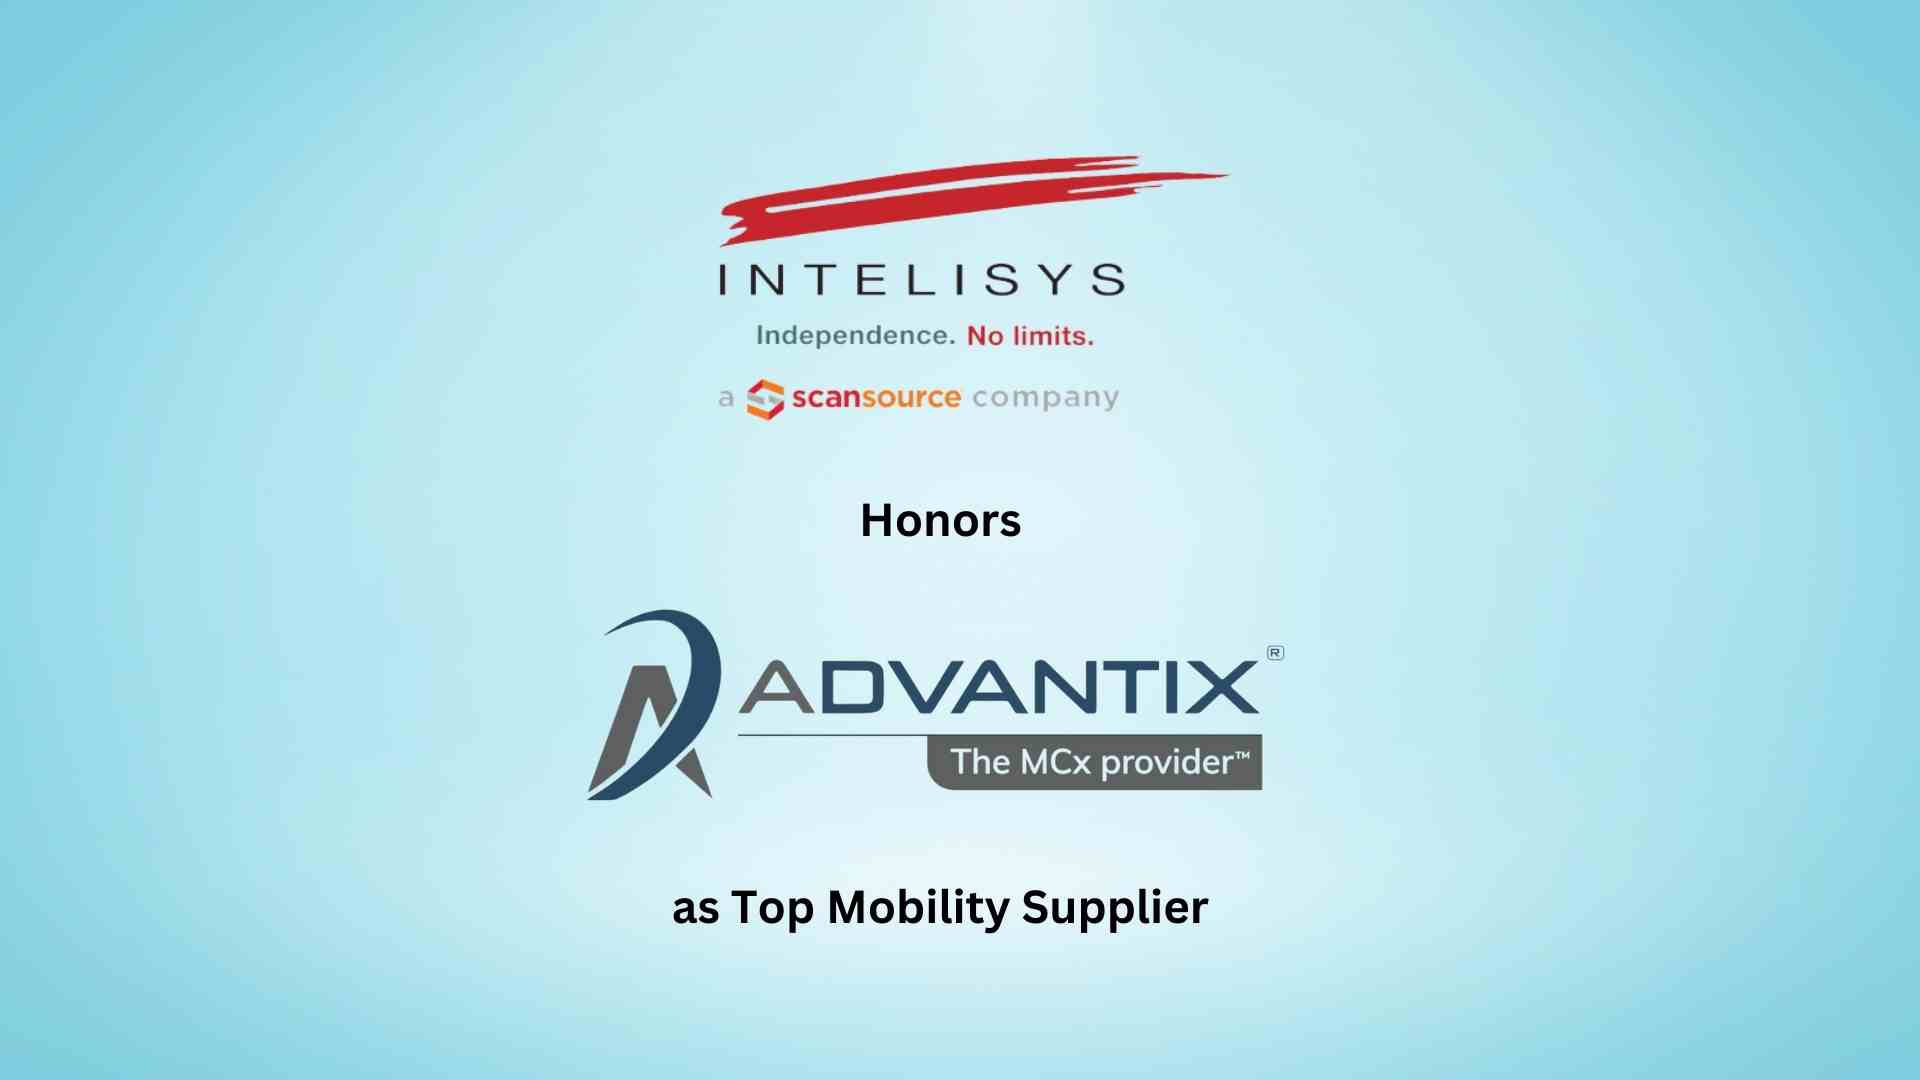 Intelisys Honors Advantix as Top Mobility Supplier